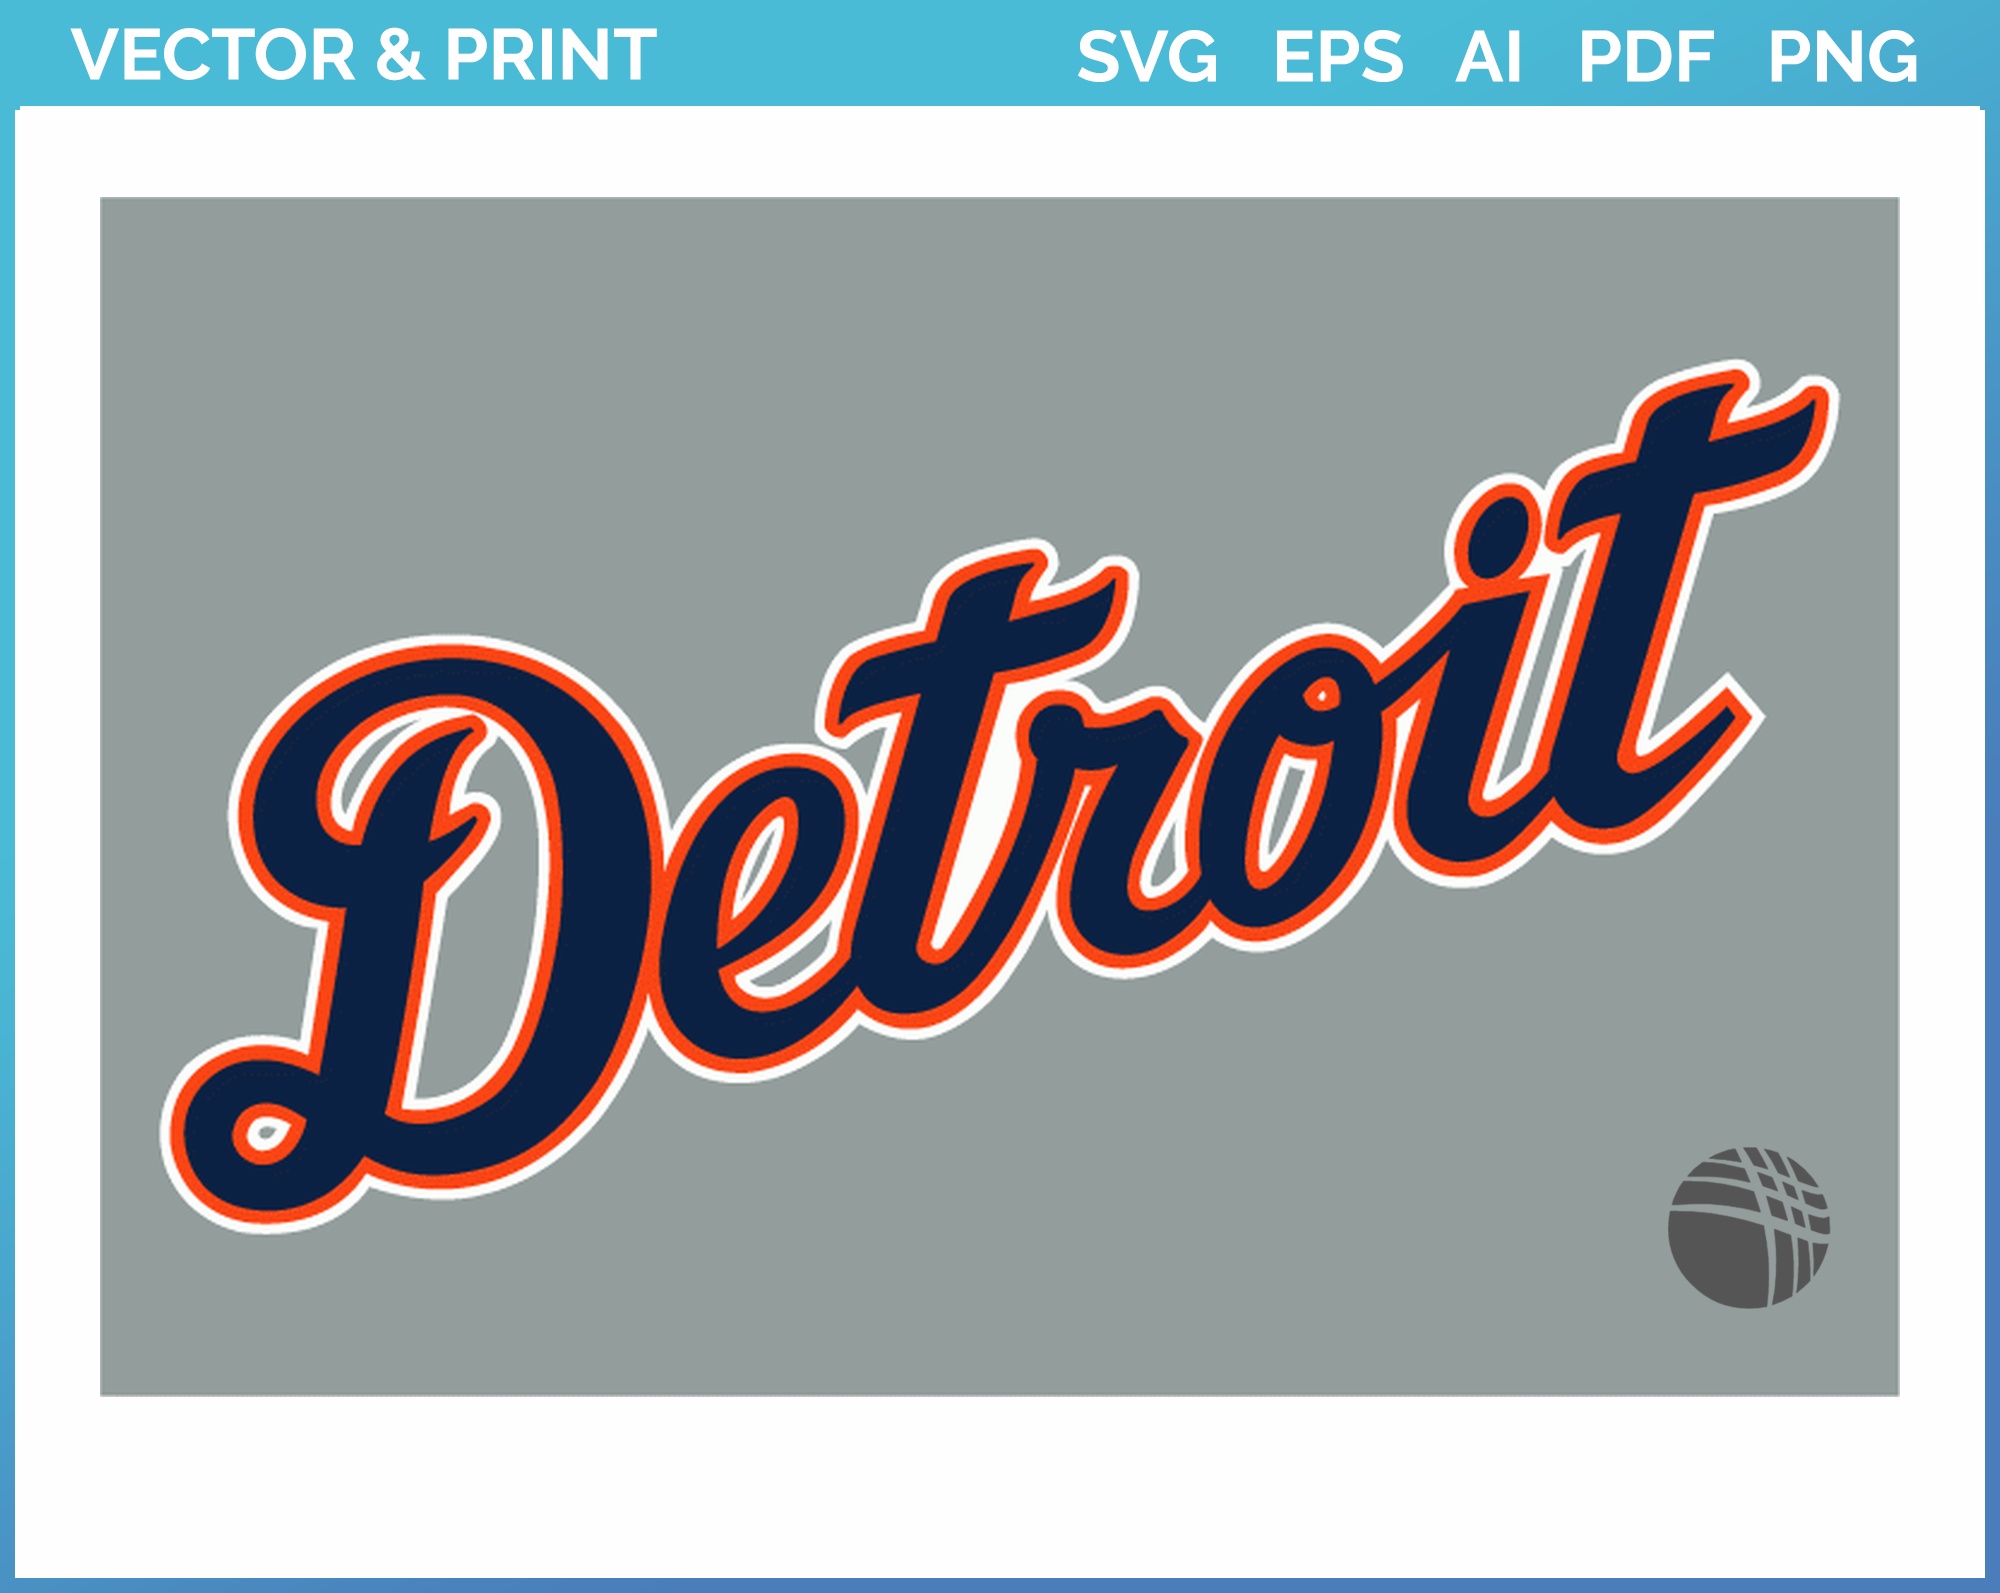 Detroit Tigers - Jersey Logo (1994) - Baseball Sports Vector SVG